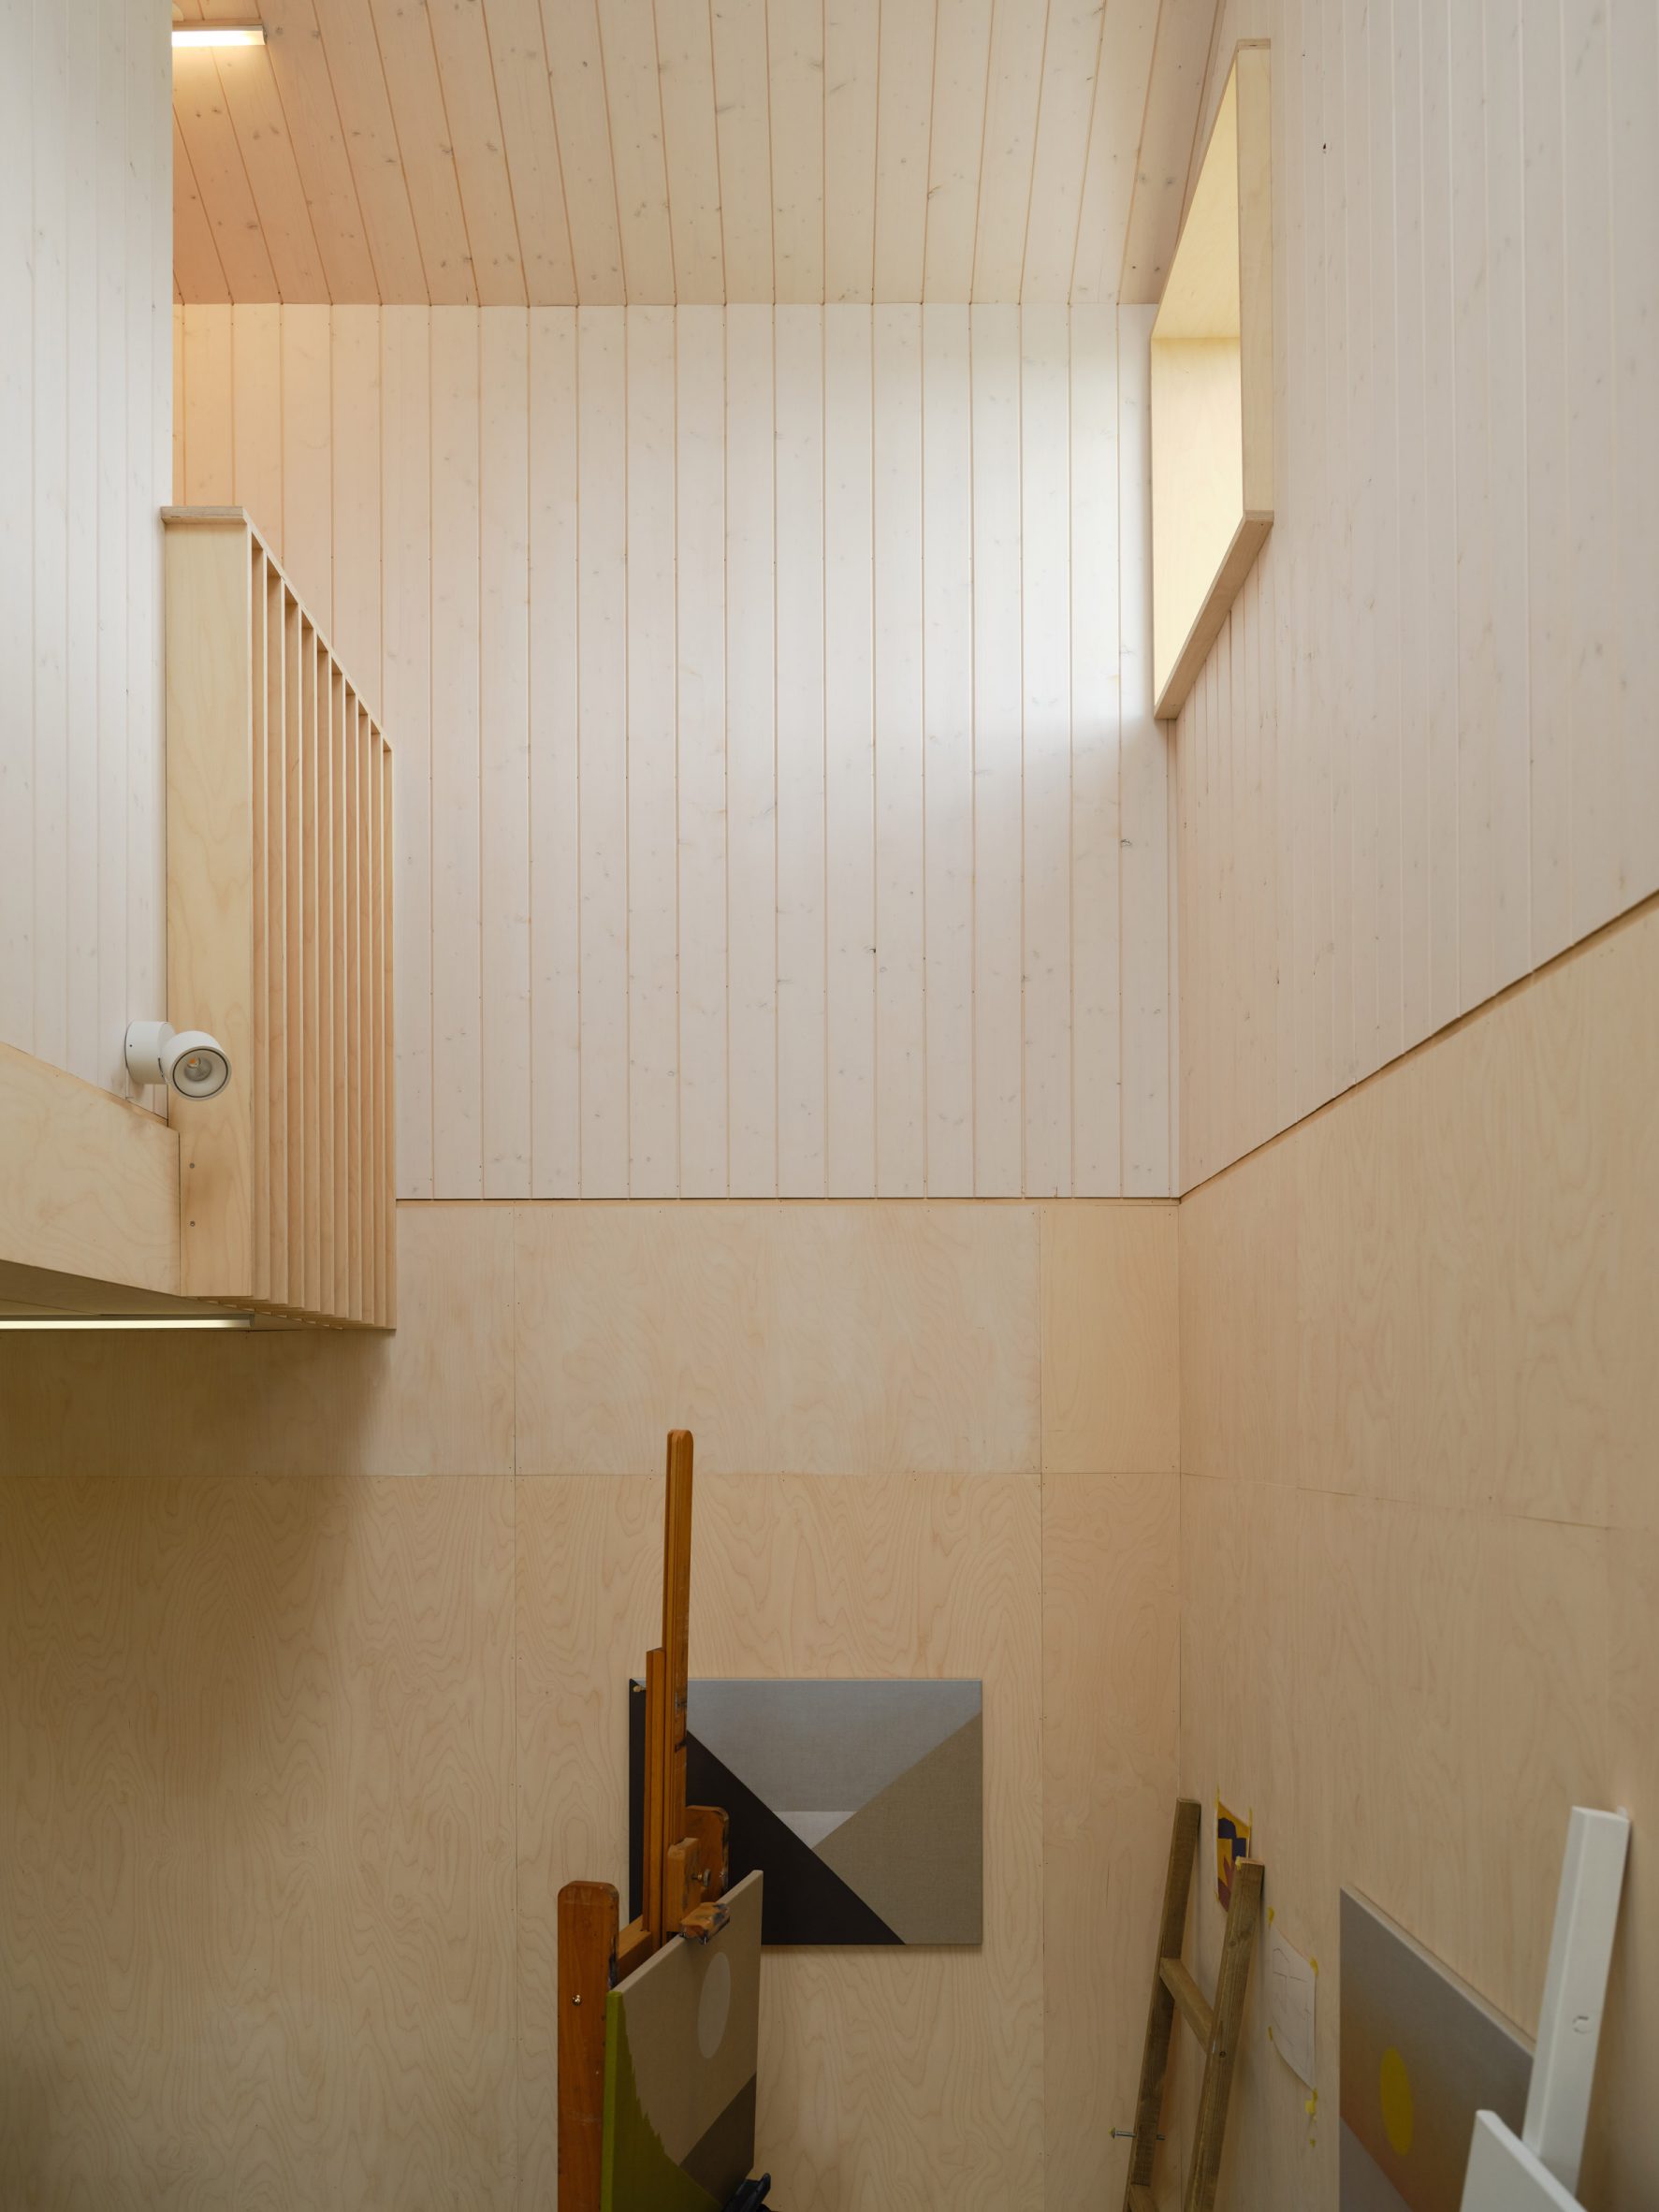 A wood-lined studio inside an Icelandic home